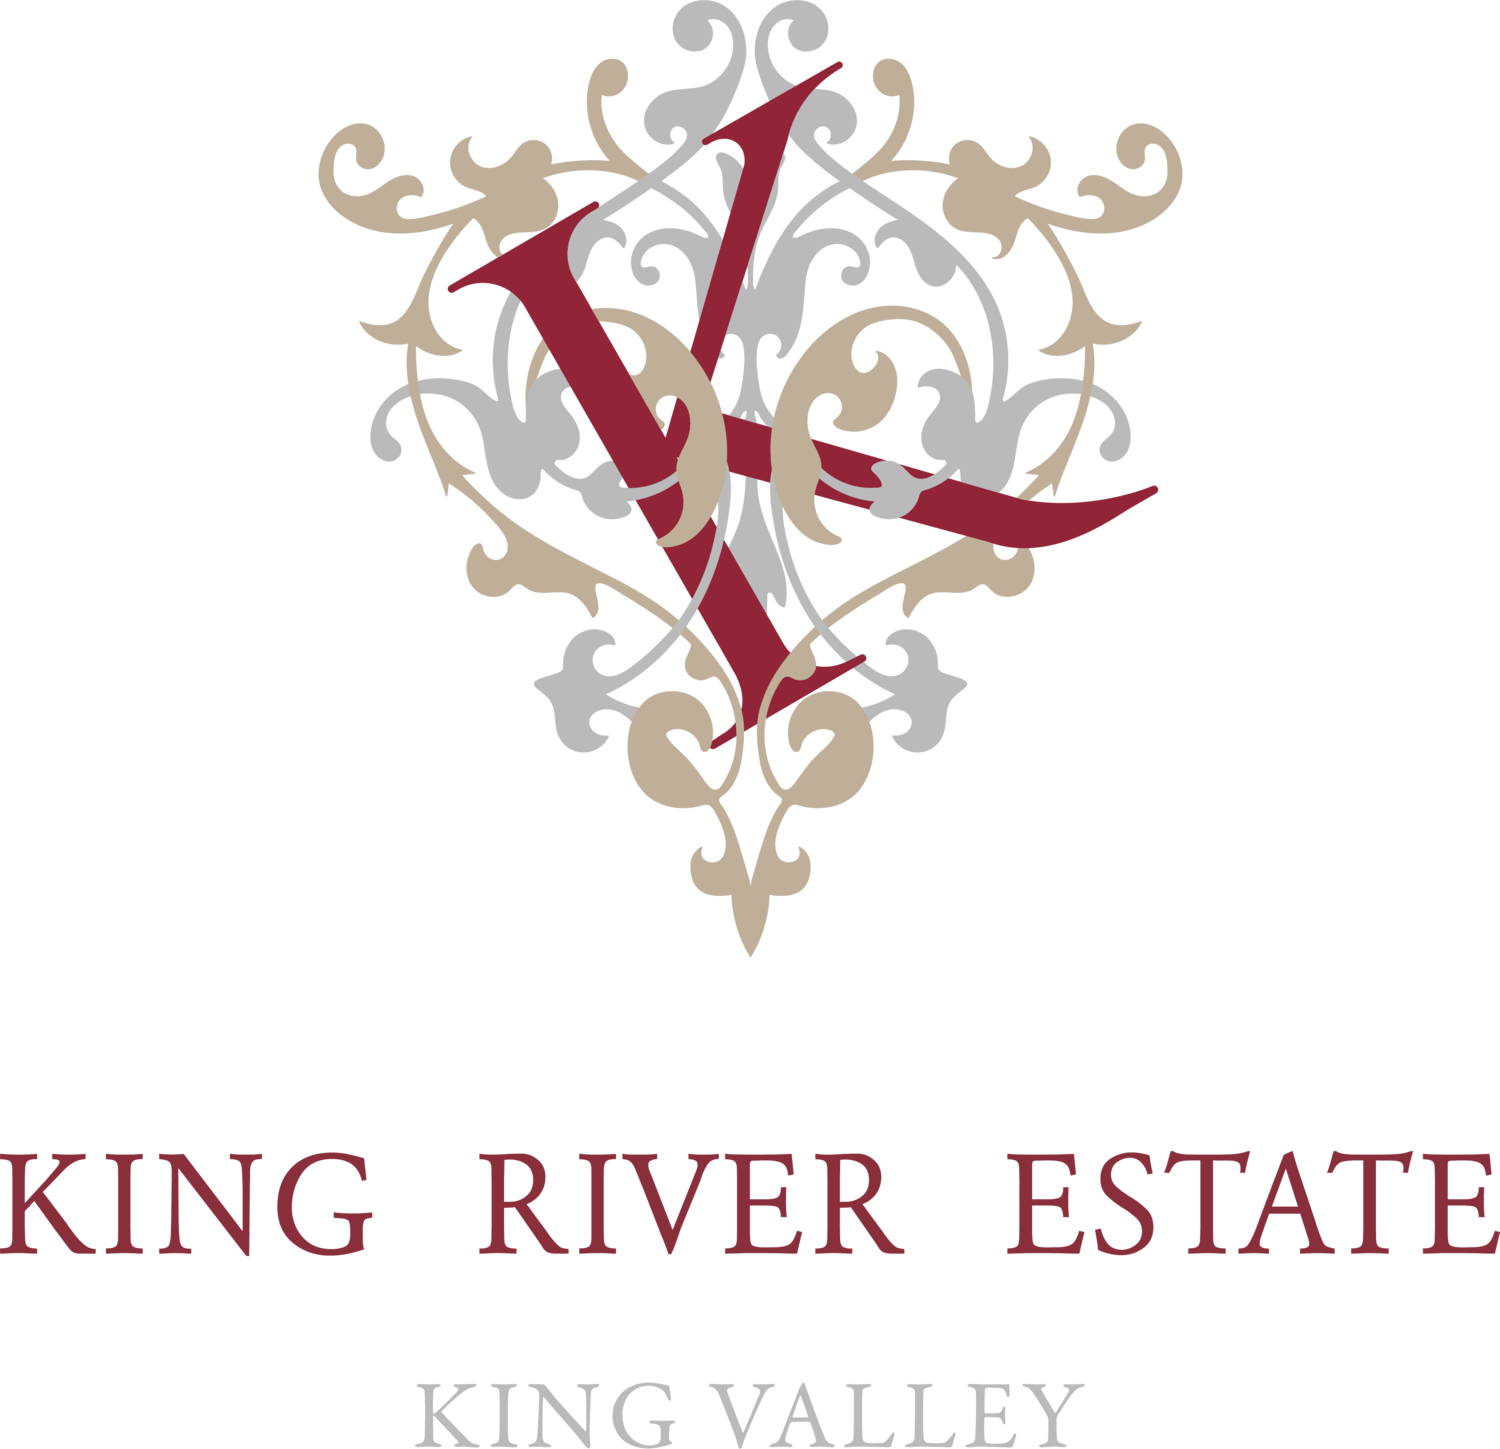 King River Estate